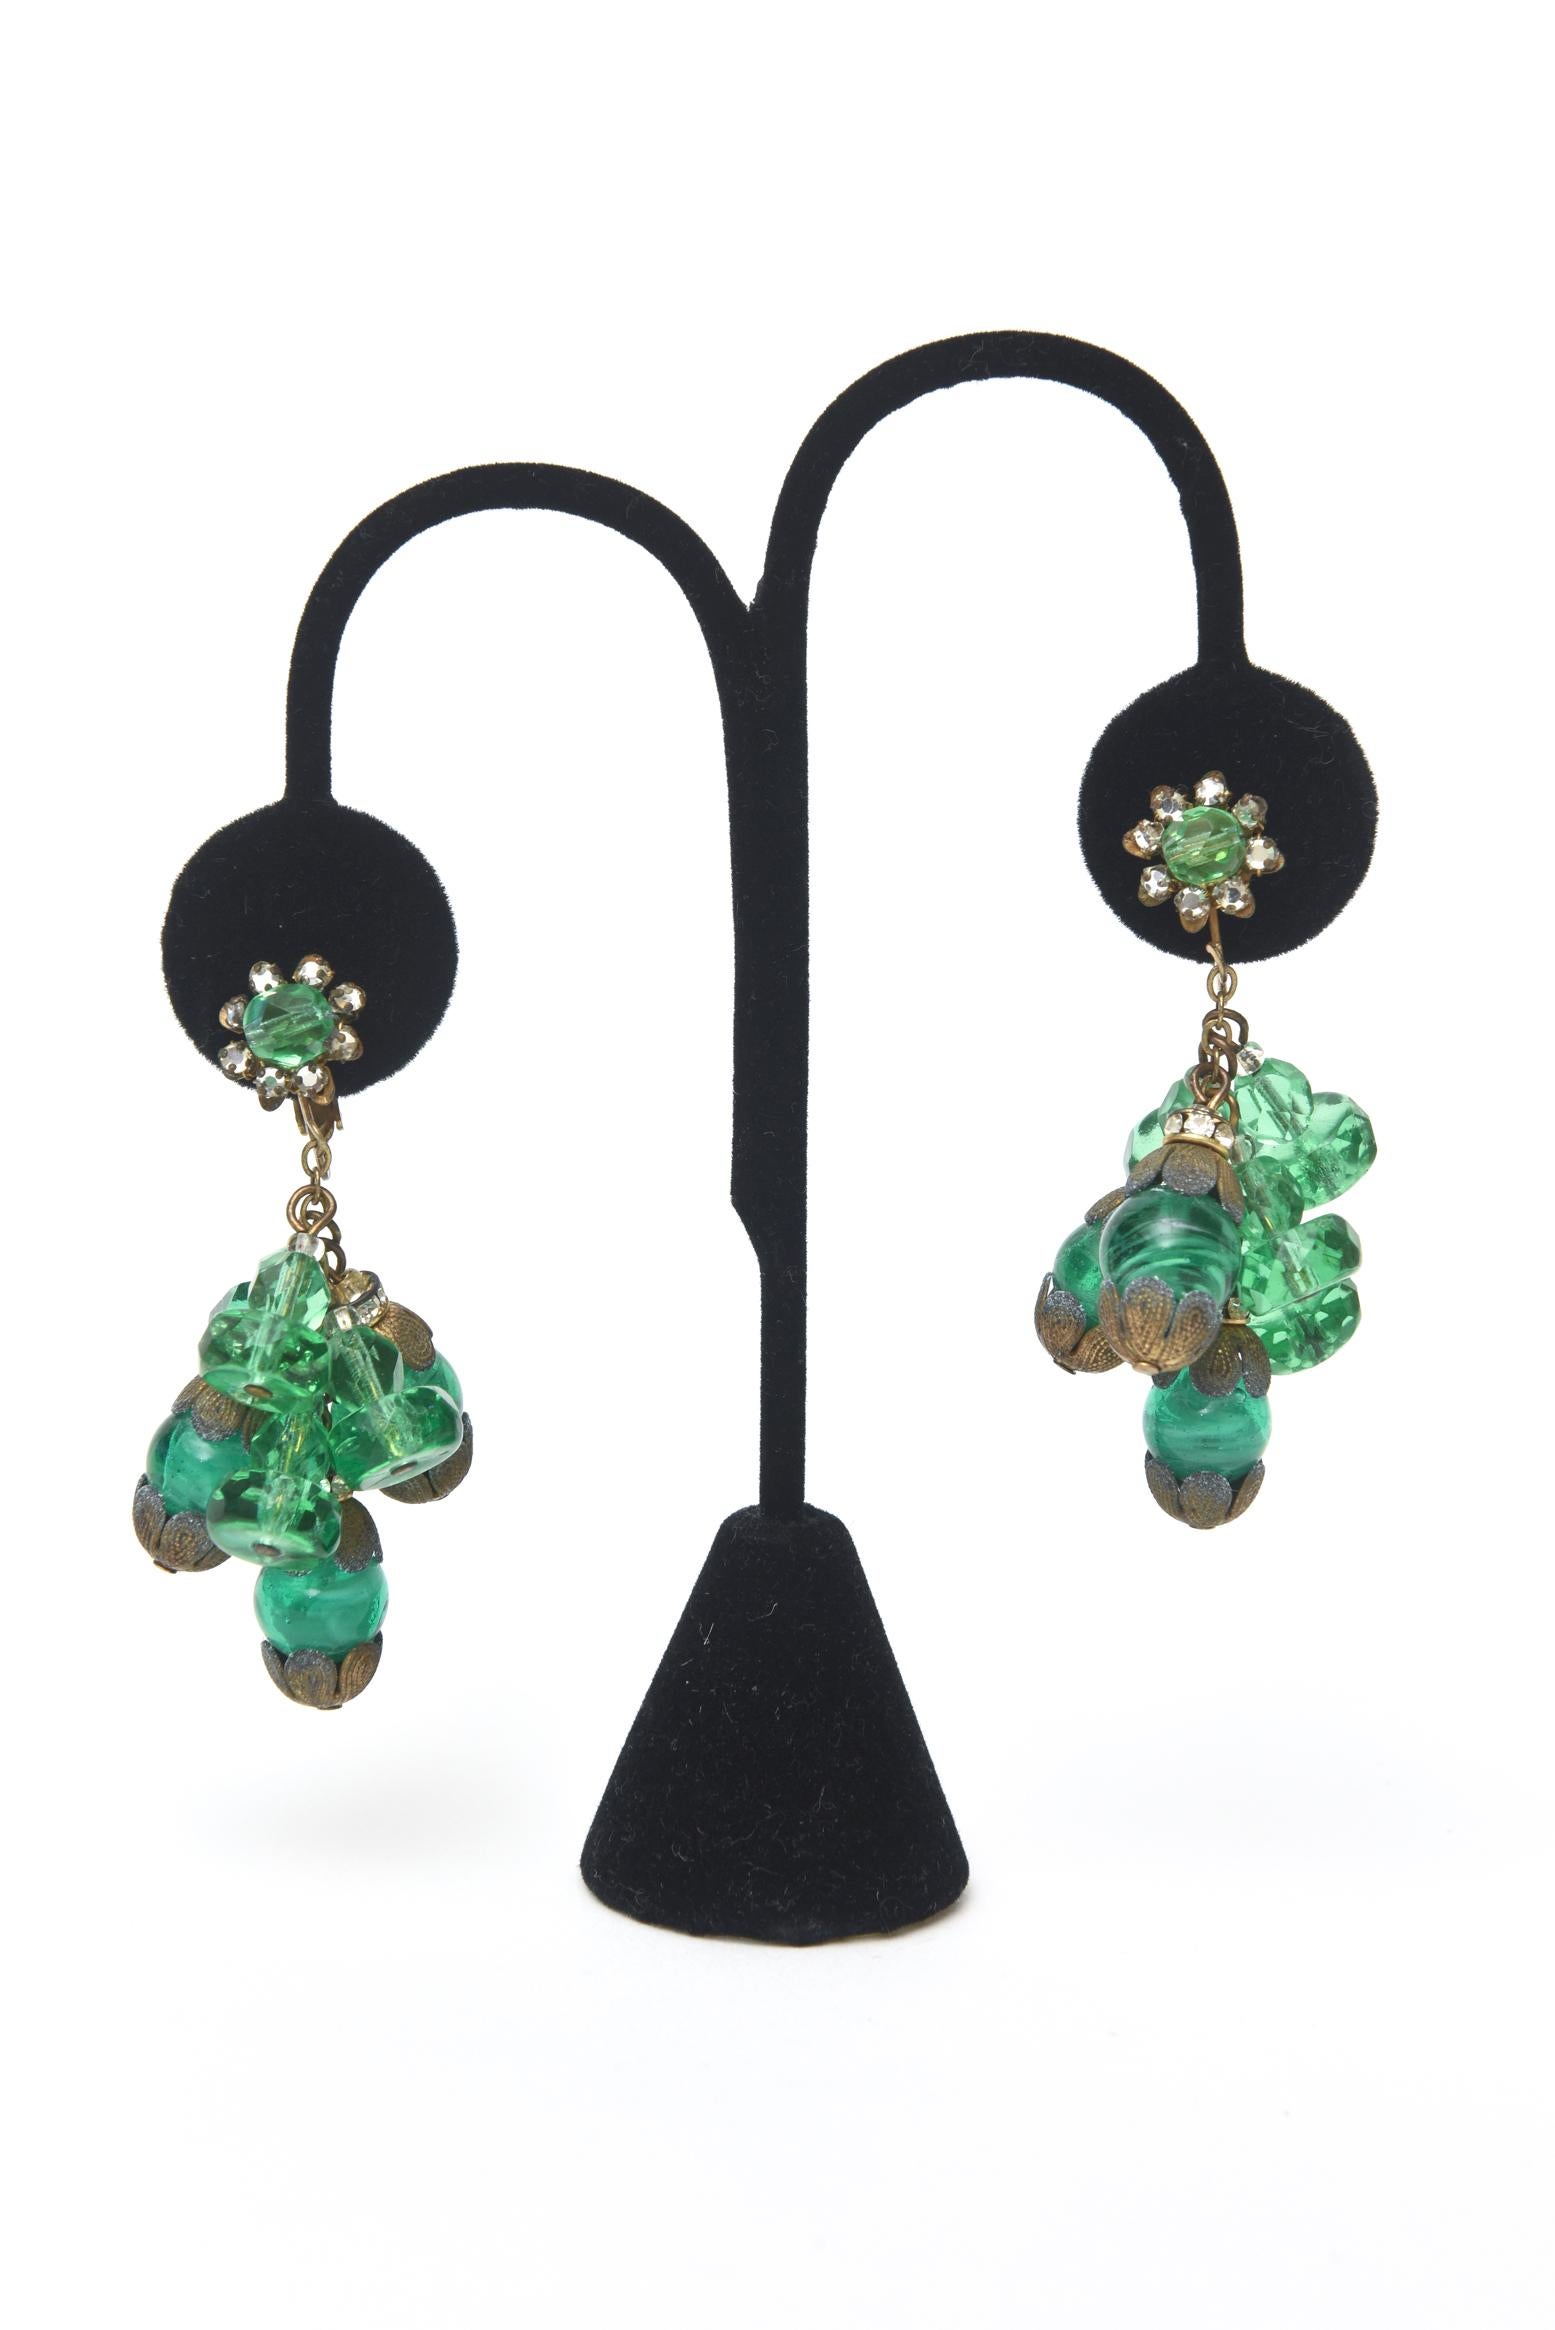 Women's  Miriam Haskell Beaded Green Glass Choker & Matching Dangle Earrings Set Vintage